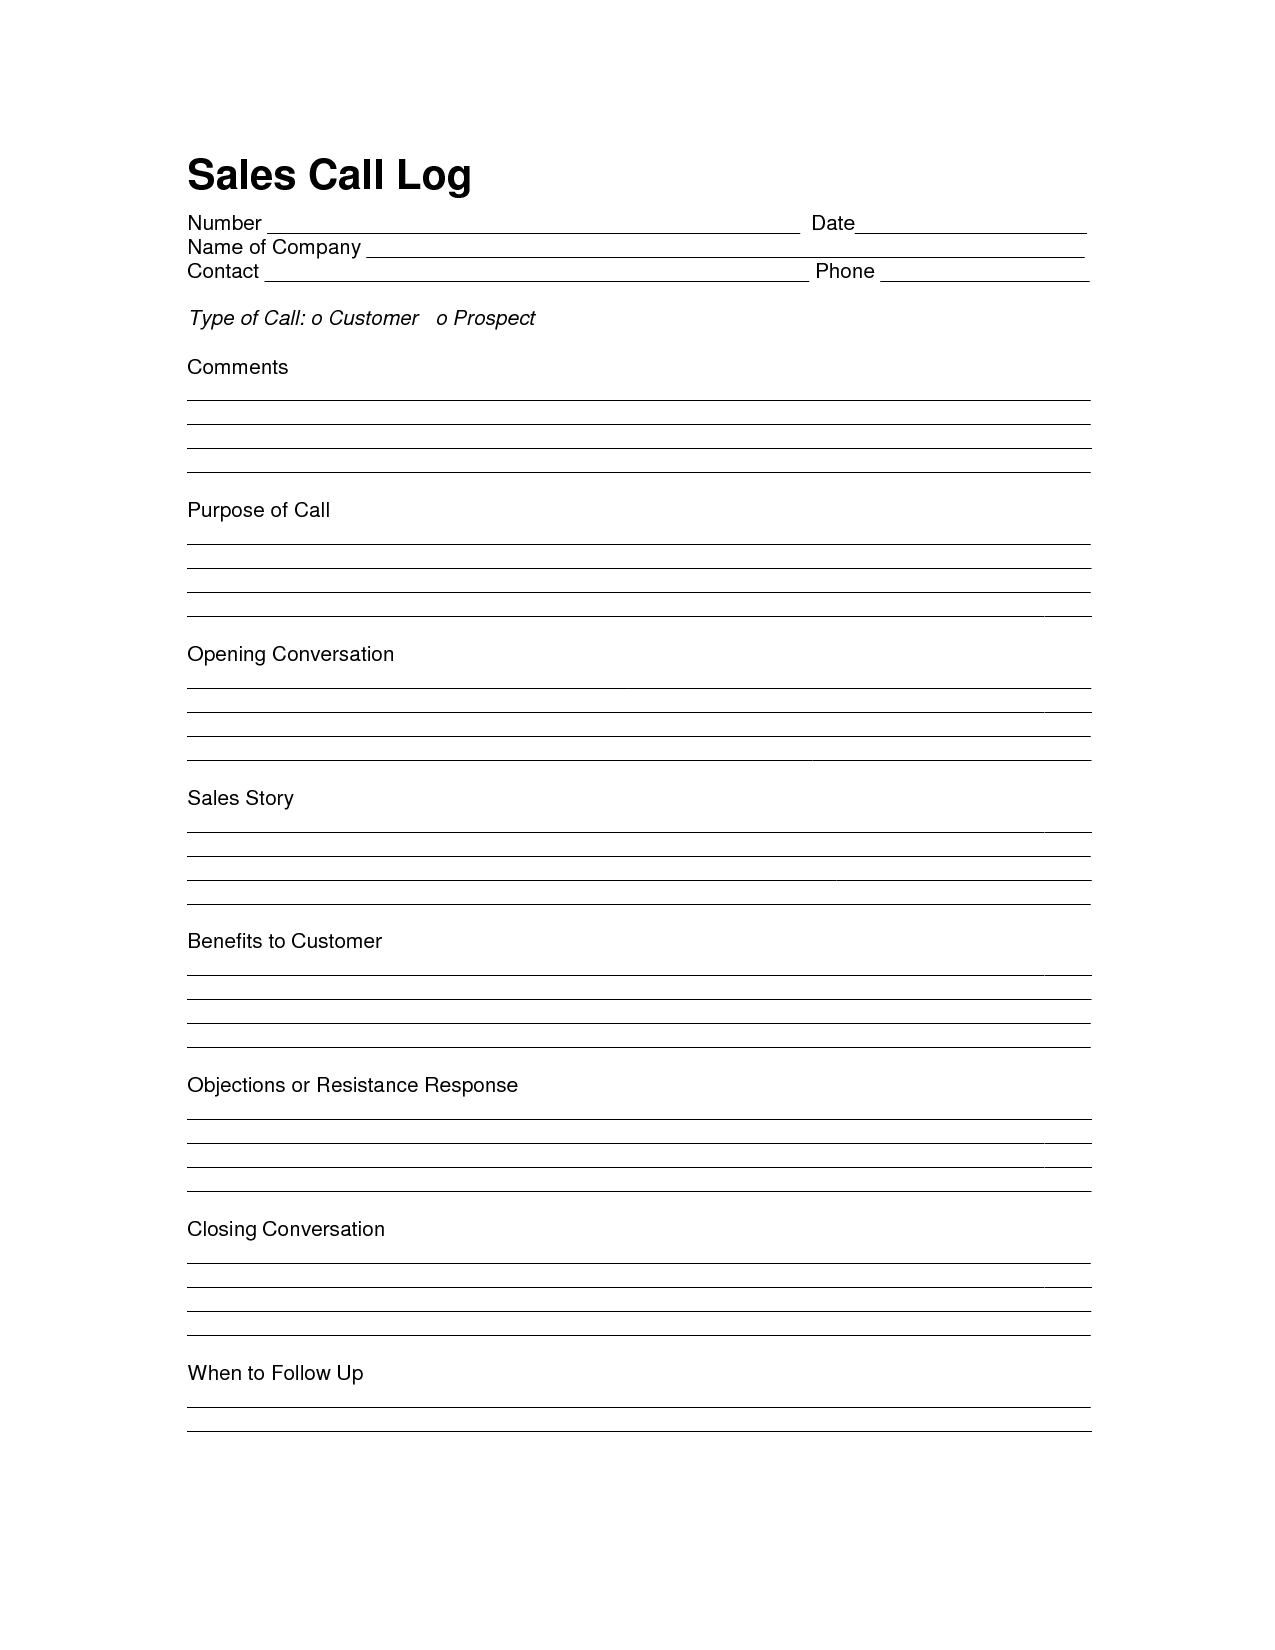 Sales Log Sheet Template | Sales Call Log Template | Call In Sales Call Report Template Free